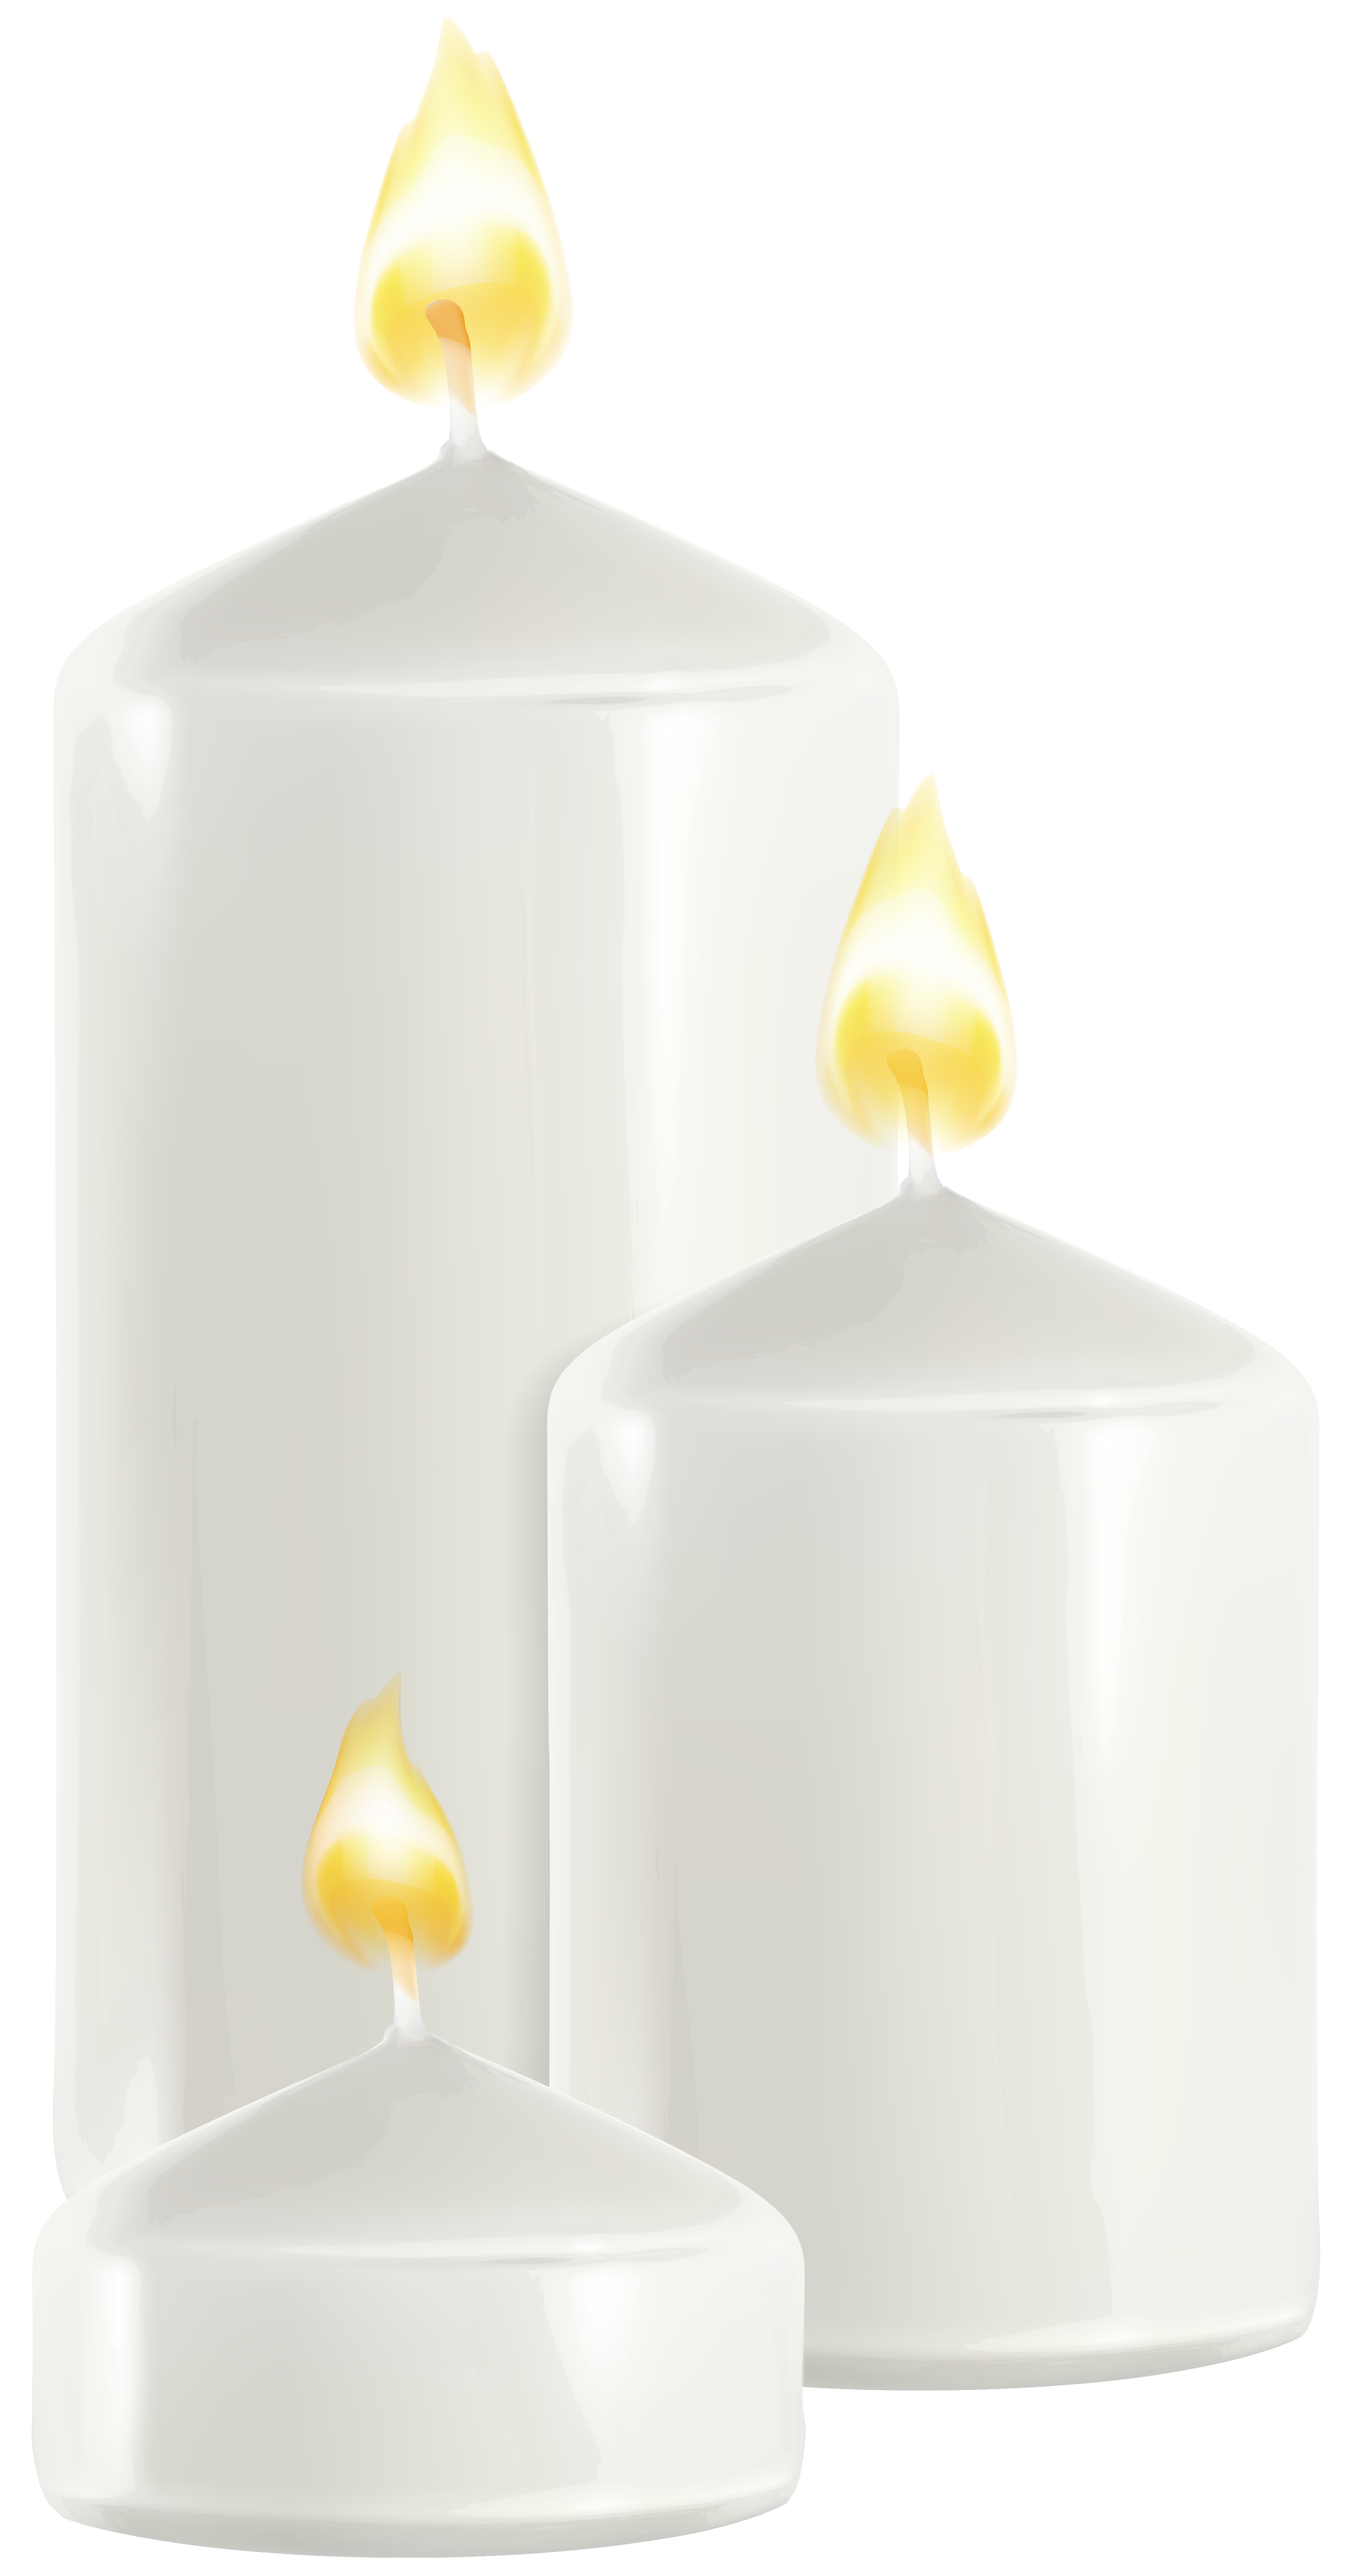 Candles PNG Clip Art - Best WEB Clipart